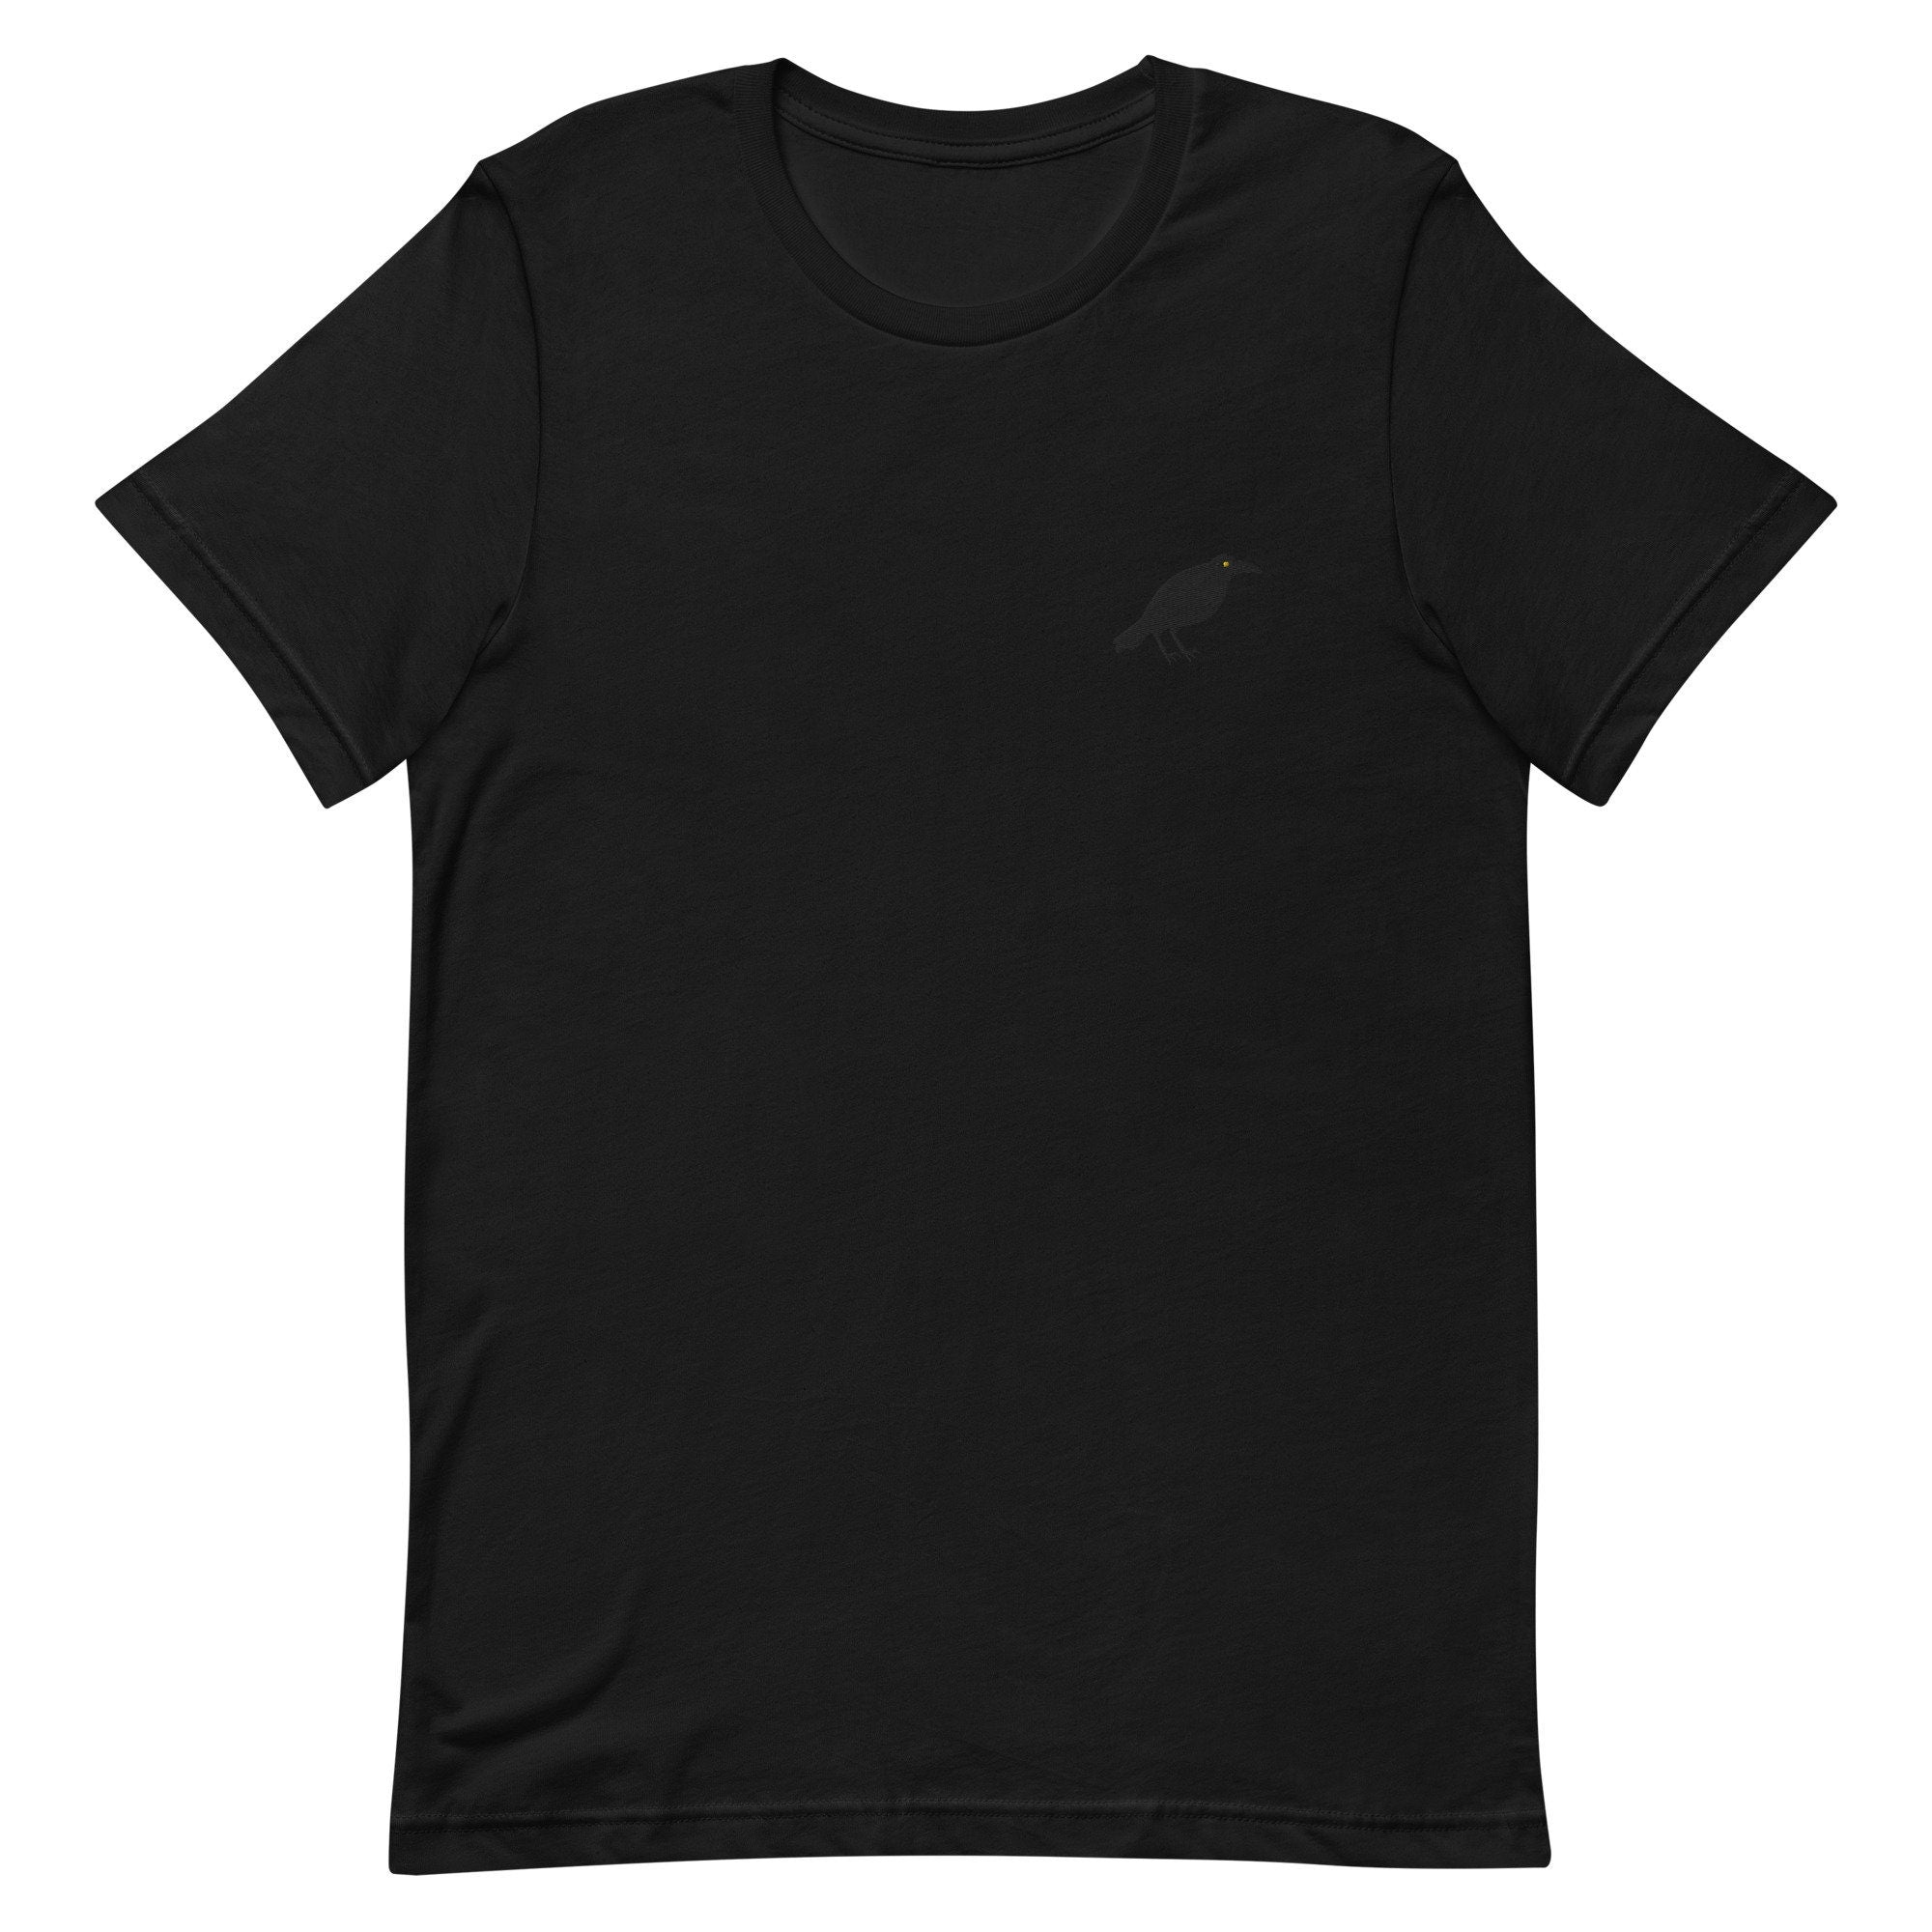 Crow Embroidered Men's T-Shirt Gift for Boyfriend, Men's Short Sleeve Shirt - Multiple Colors